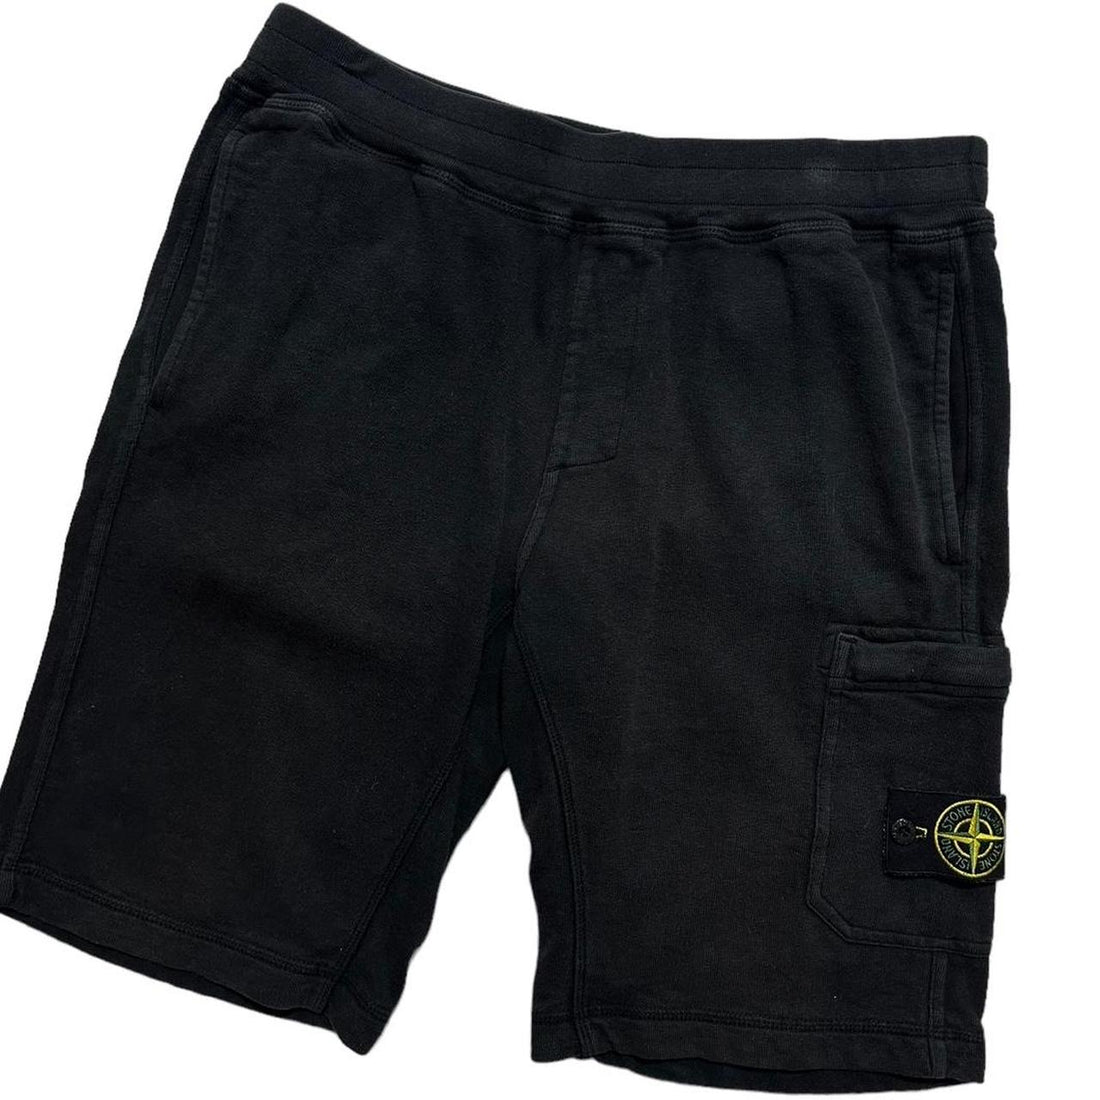 Stone Island Black Cotton Shorts